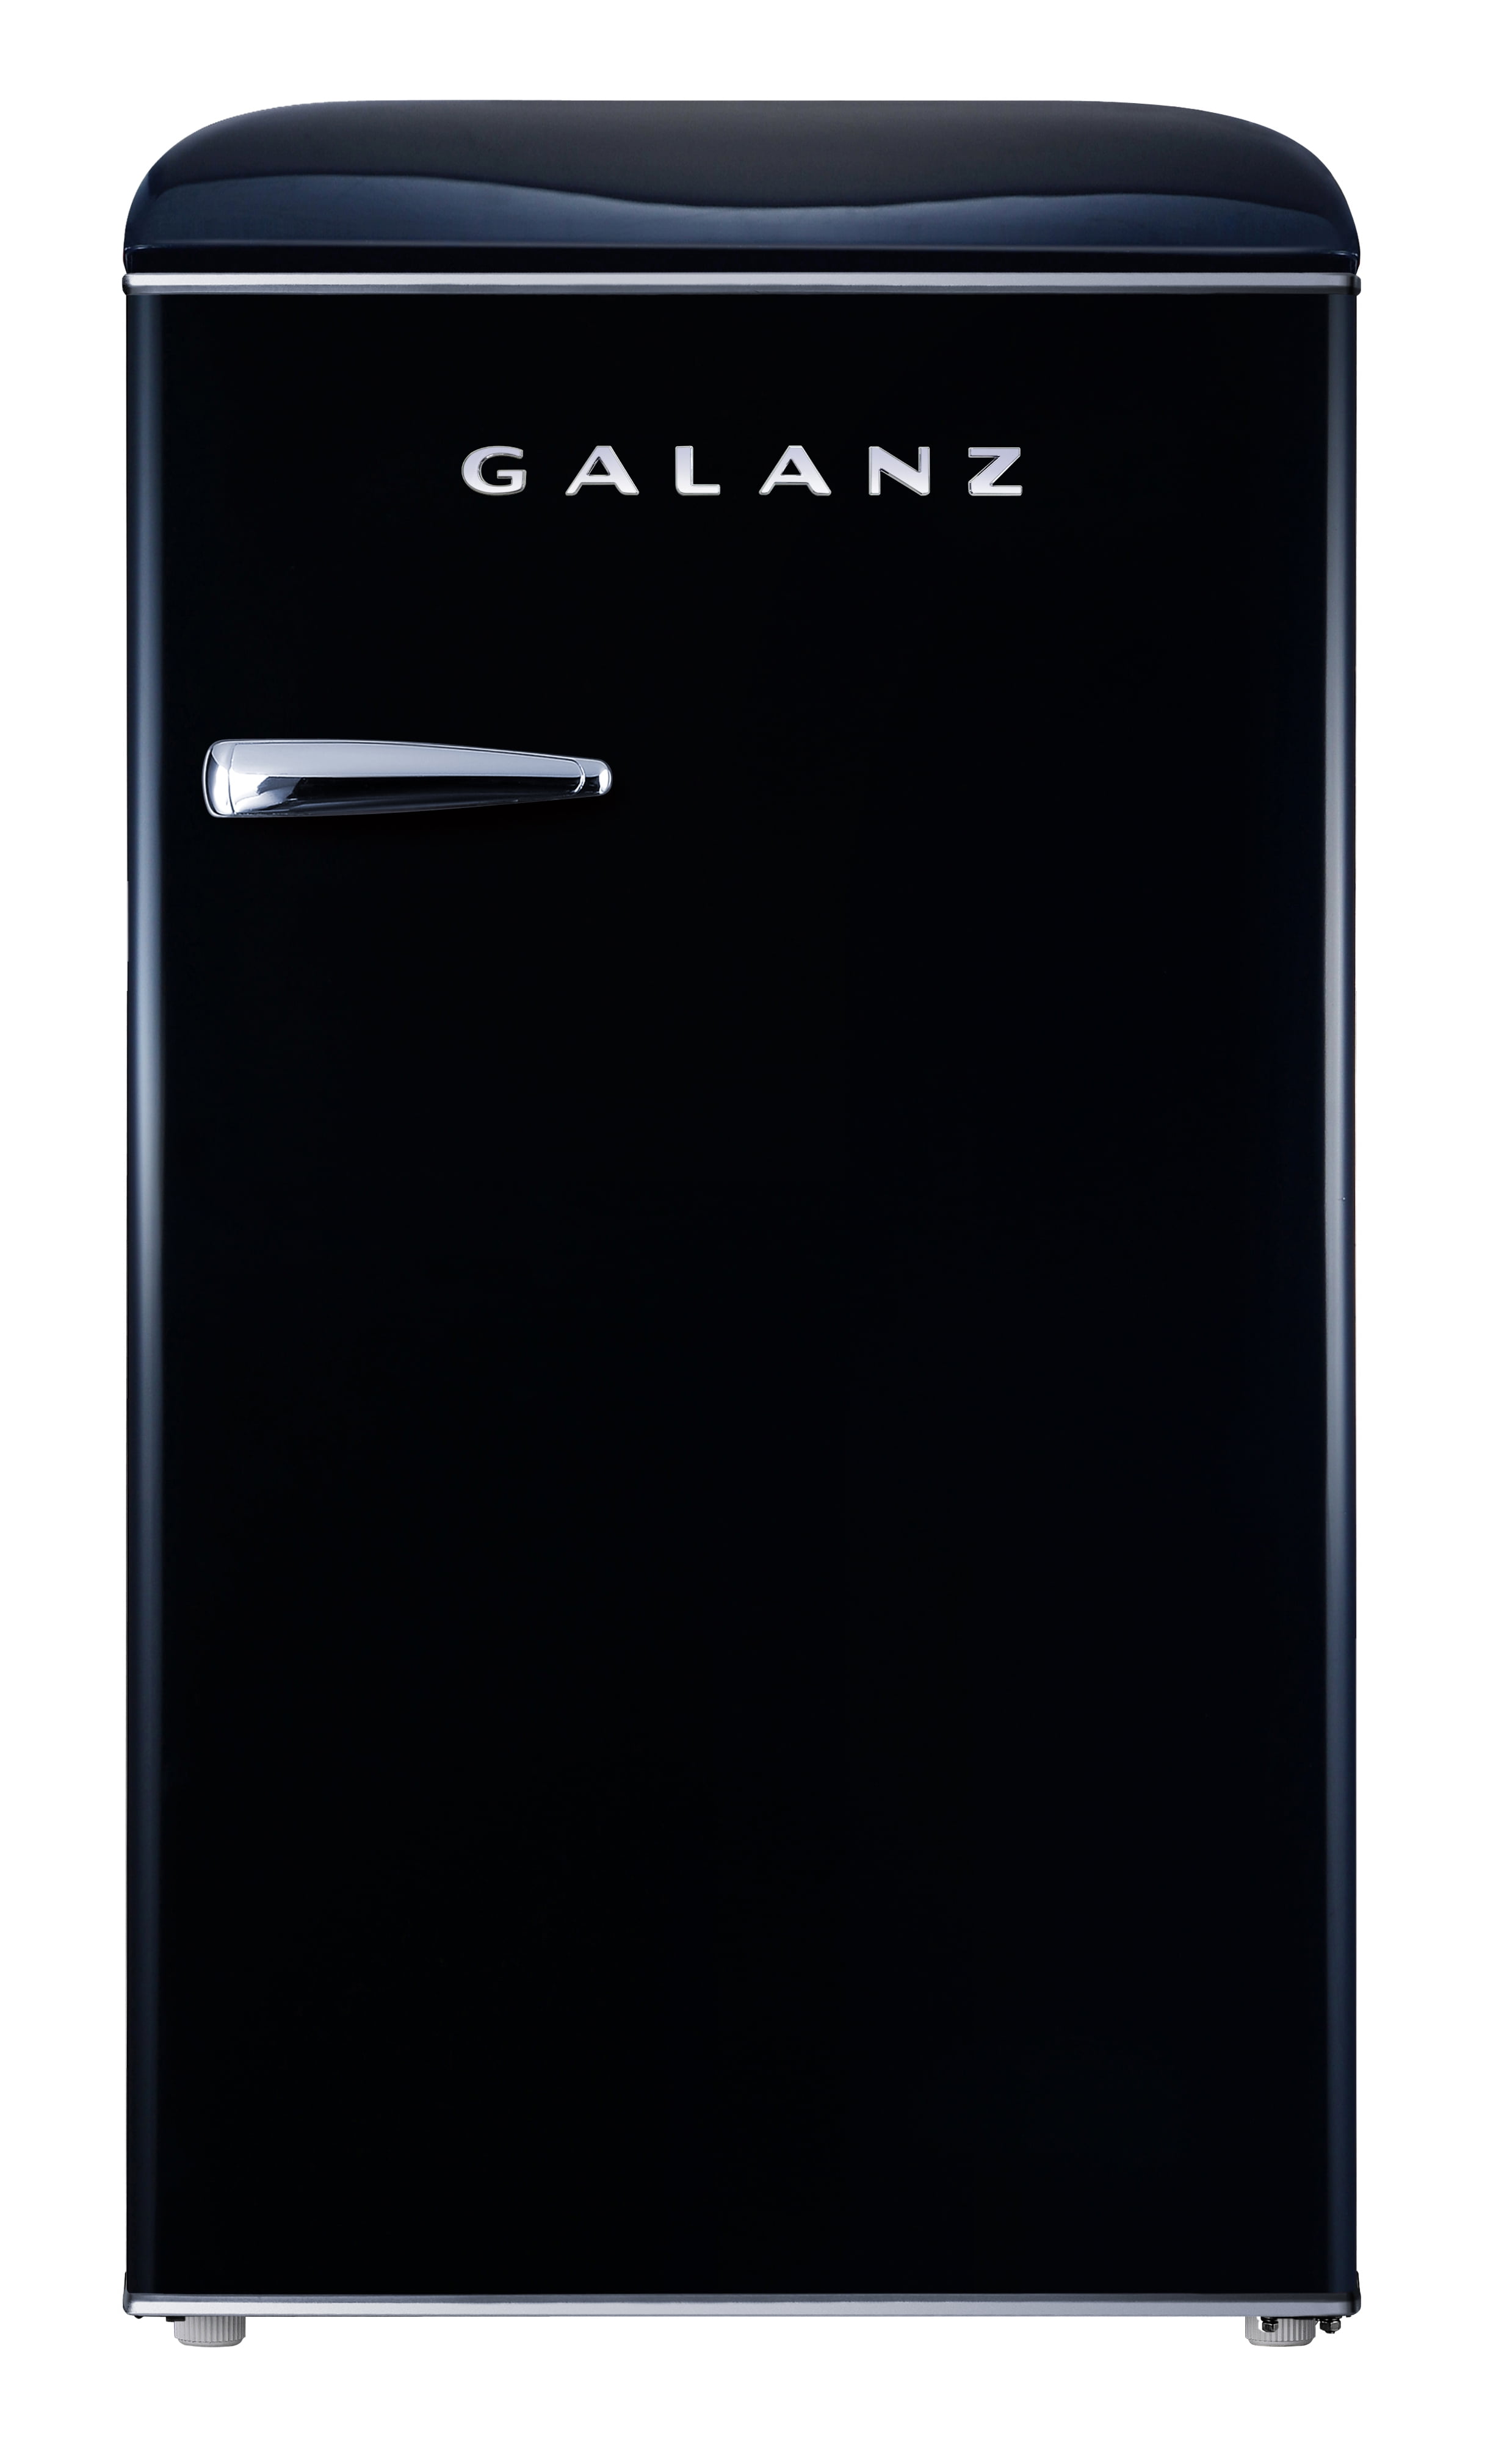 Galanz 3 5 Cu Ft Retro Single Door Refrigerator Black Walmart Com